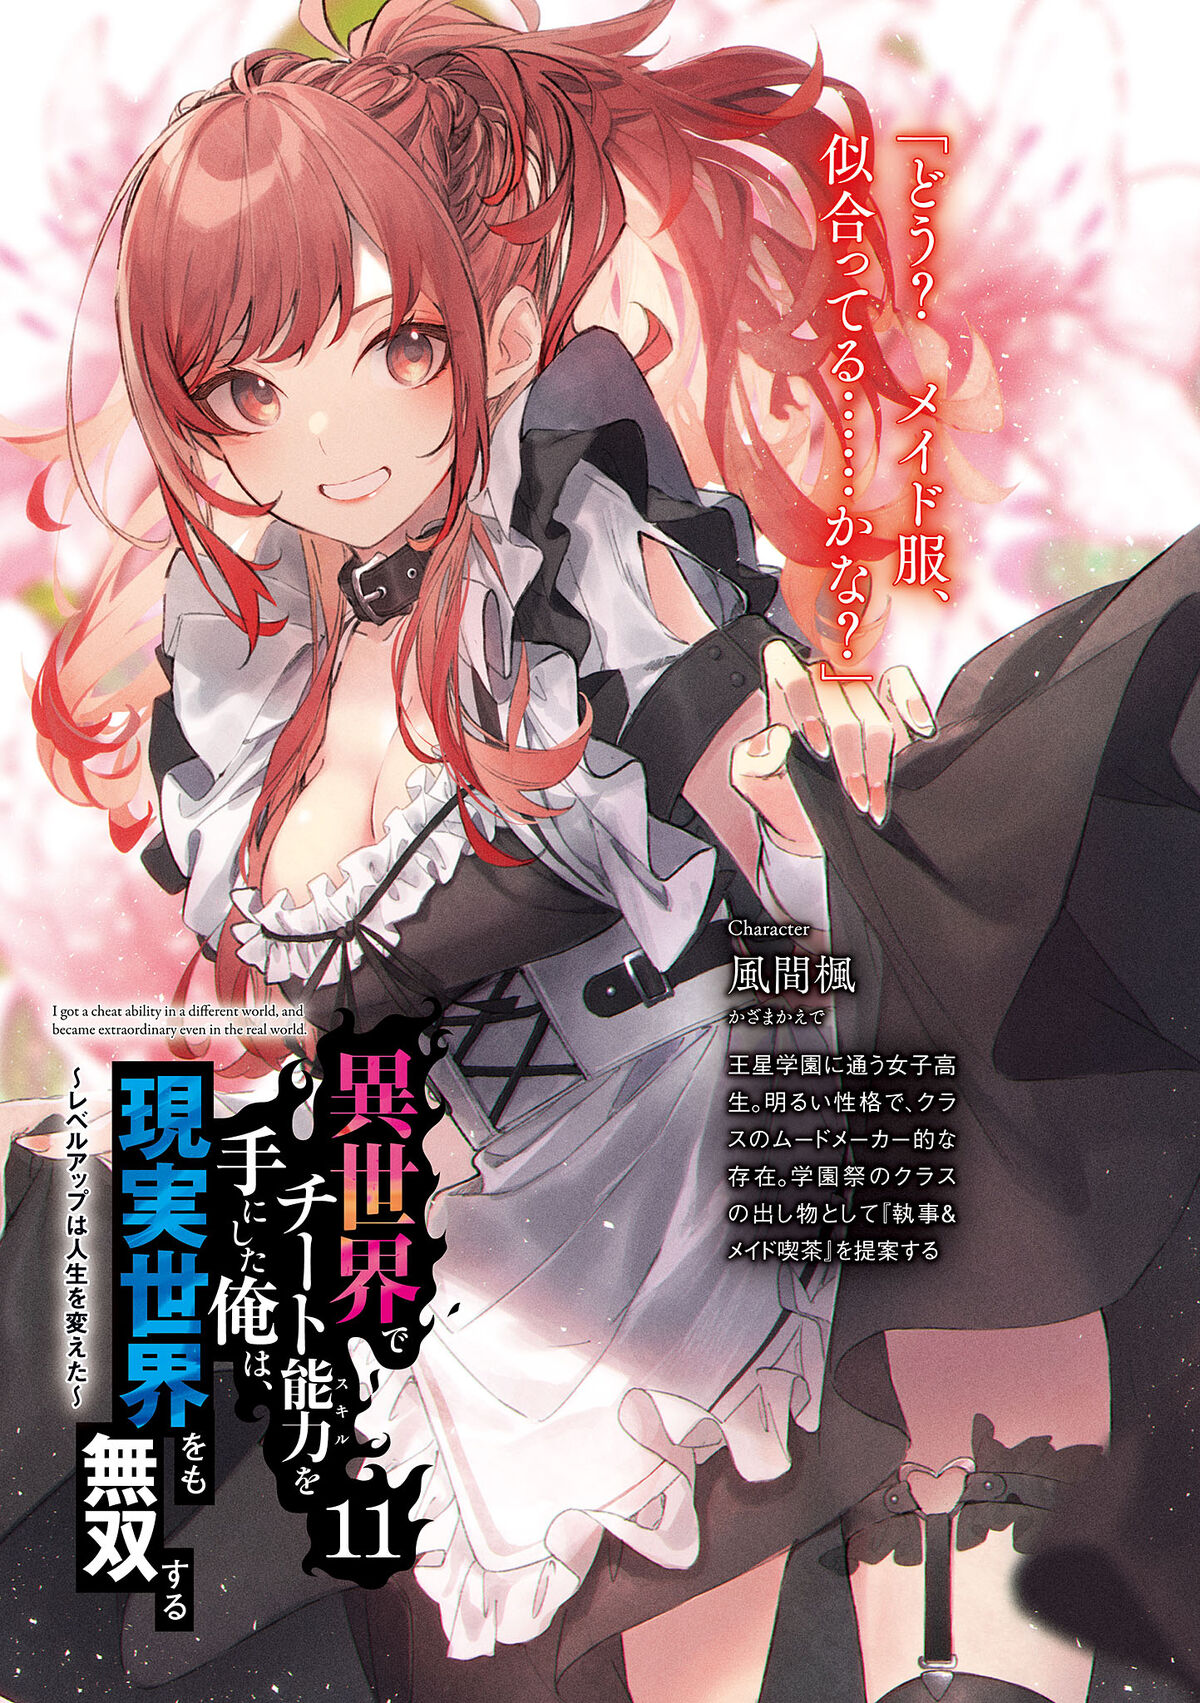 Light Novel Volume 5, Cheat Musou Wiki